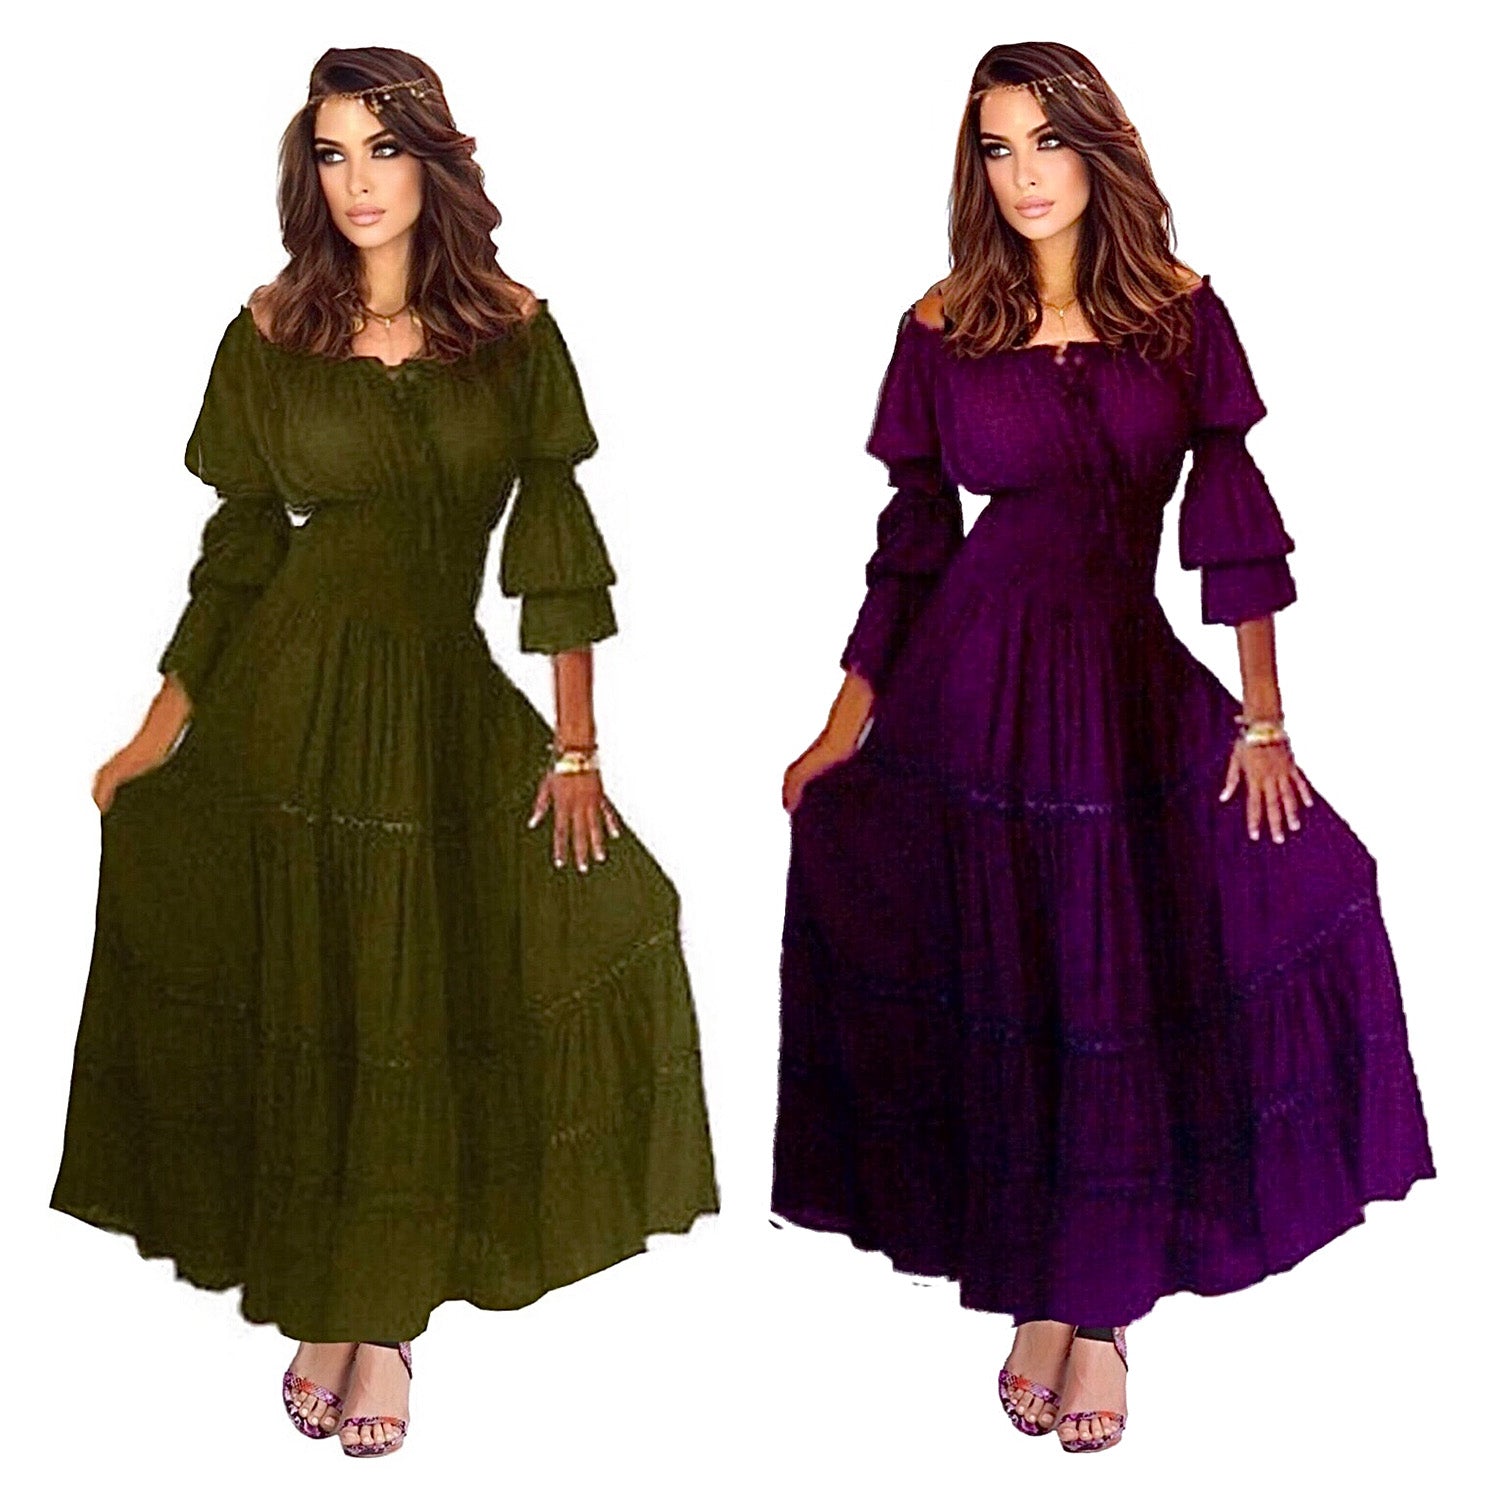 Evelyn Mexican Gypsy Ruffle Peasant Dress Skirt Trim - The Bohemian Closet